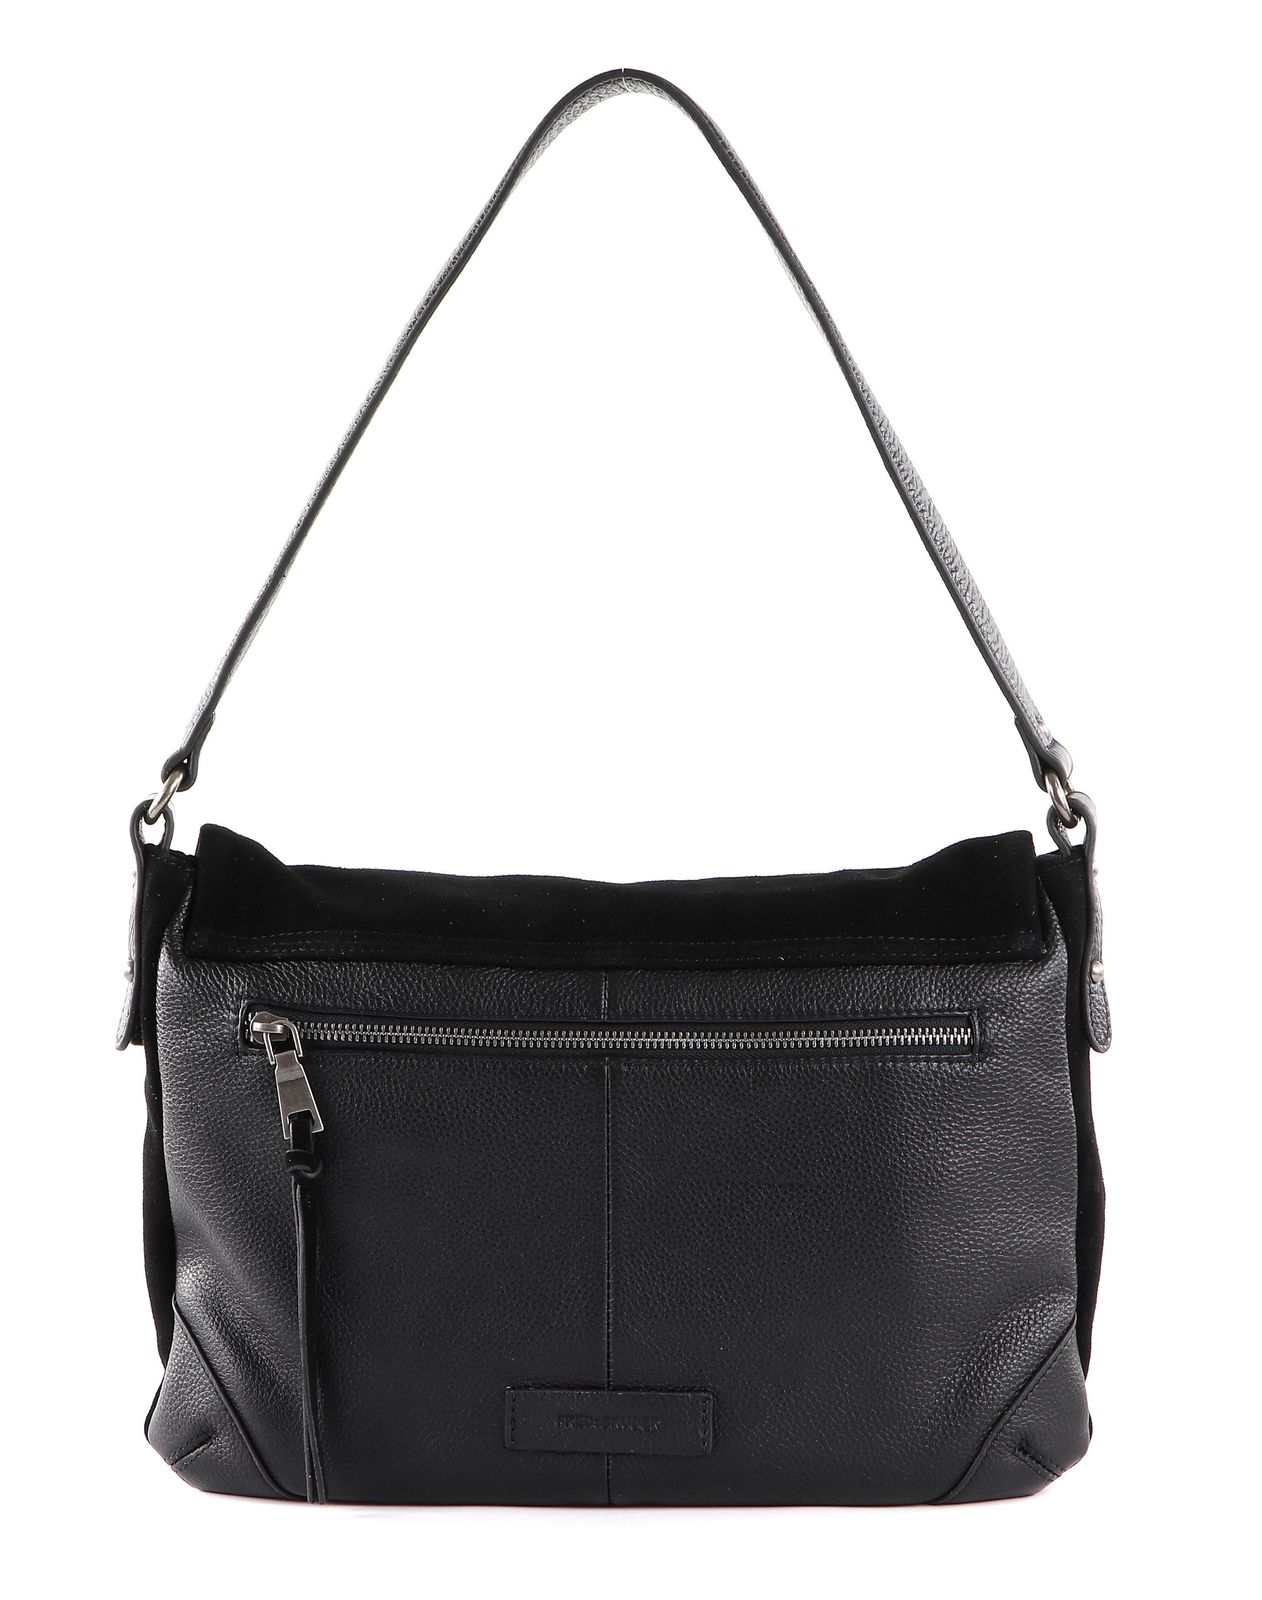 FREDsBRUDER Sylvin Satchel Black | Buy bags, purses & accessories ...